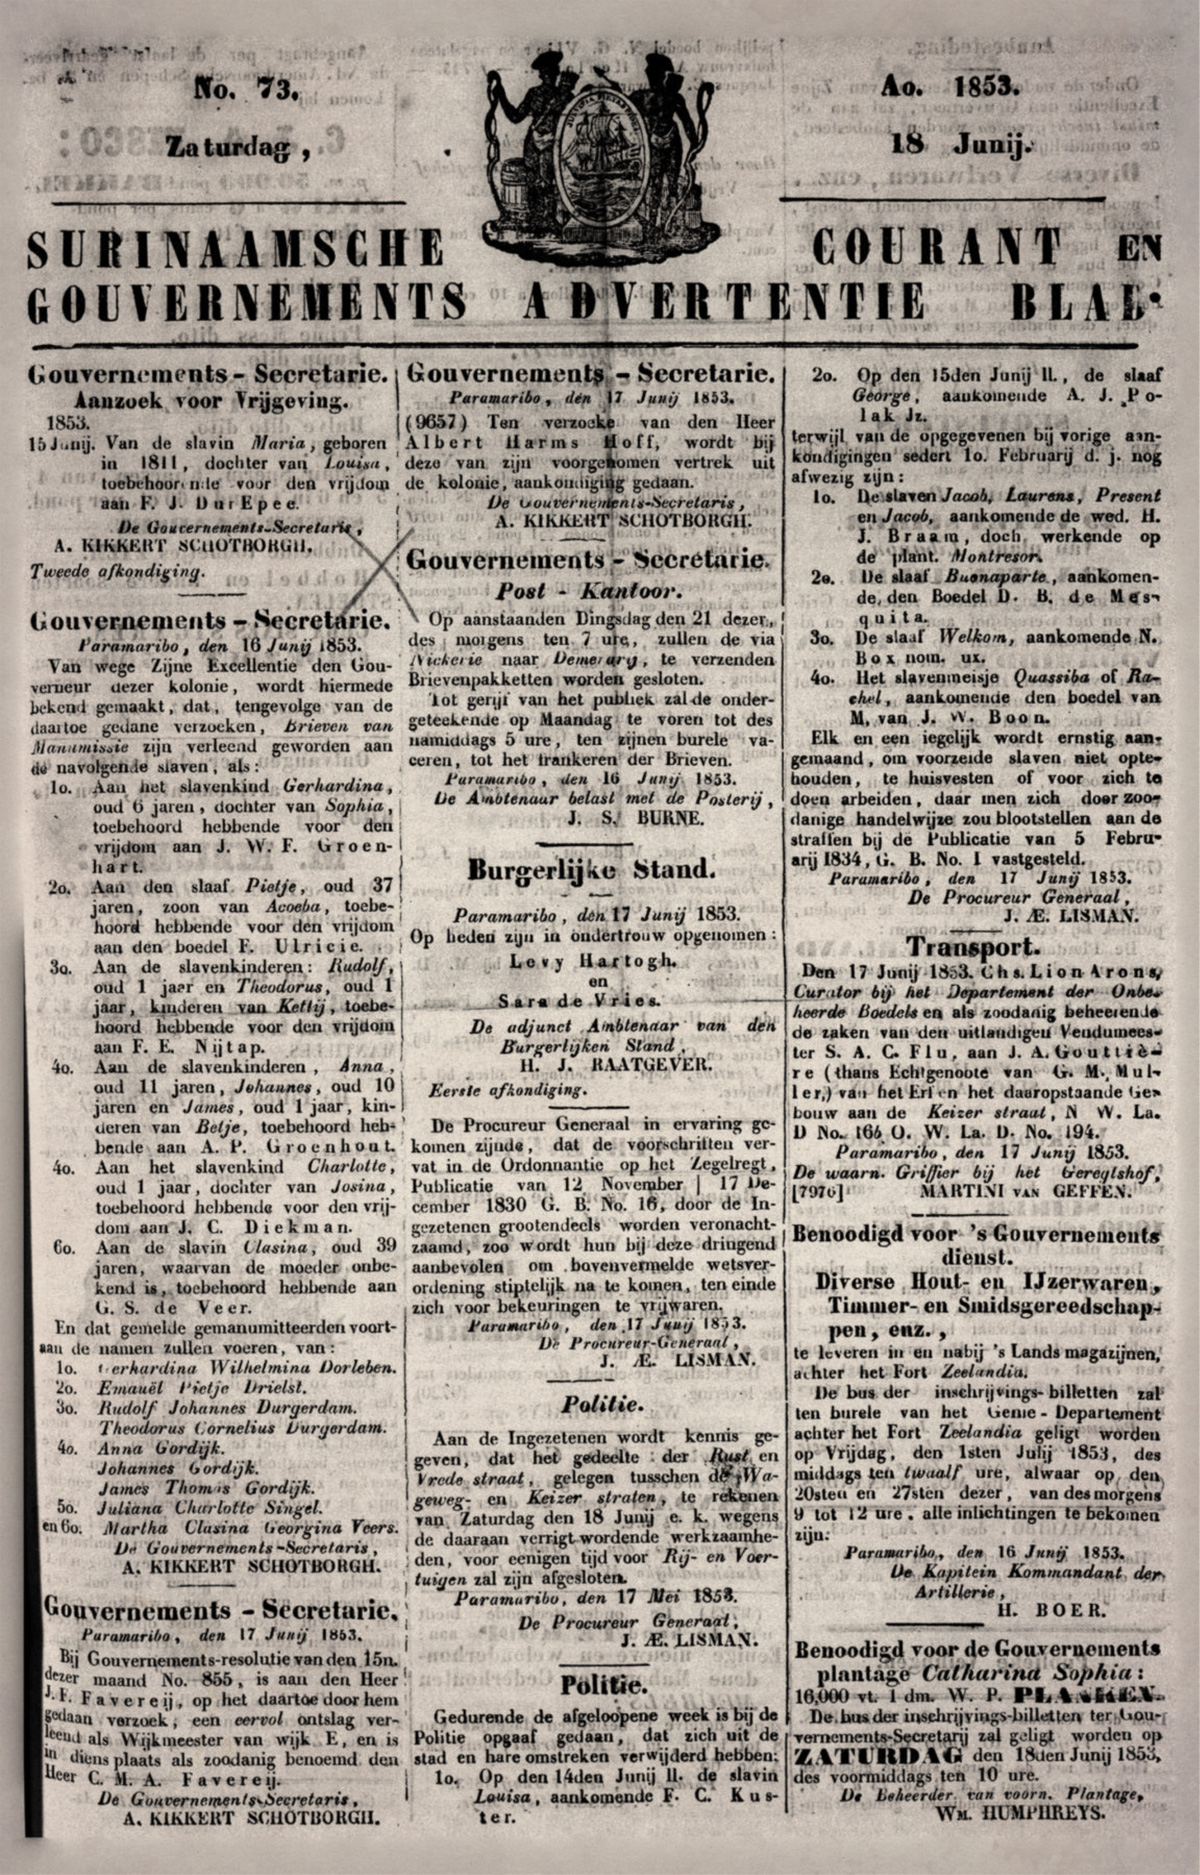 Old Suriname newspaper